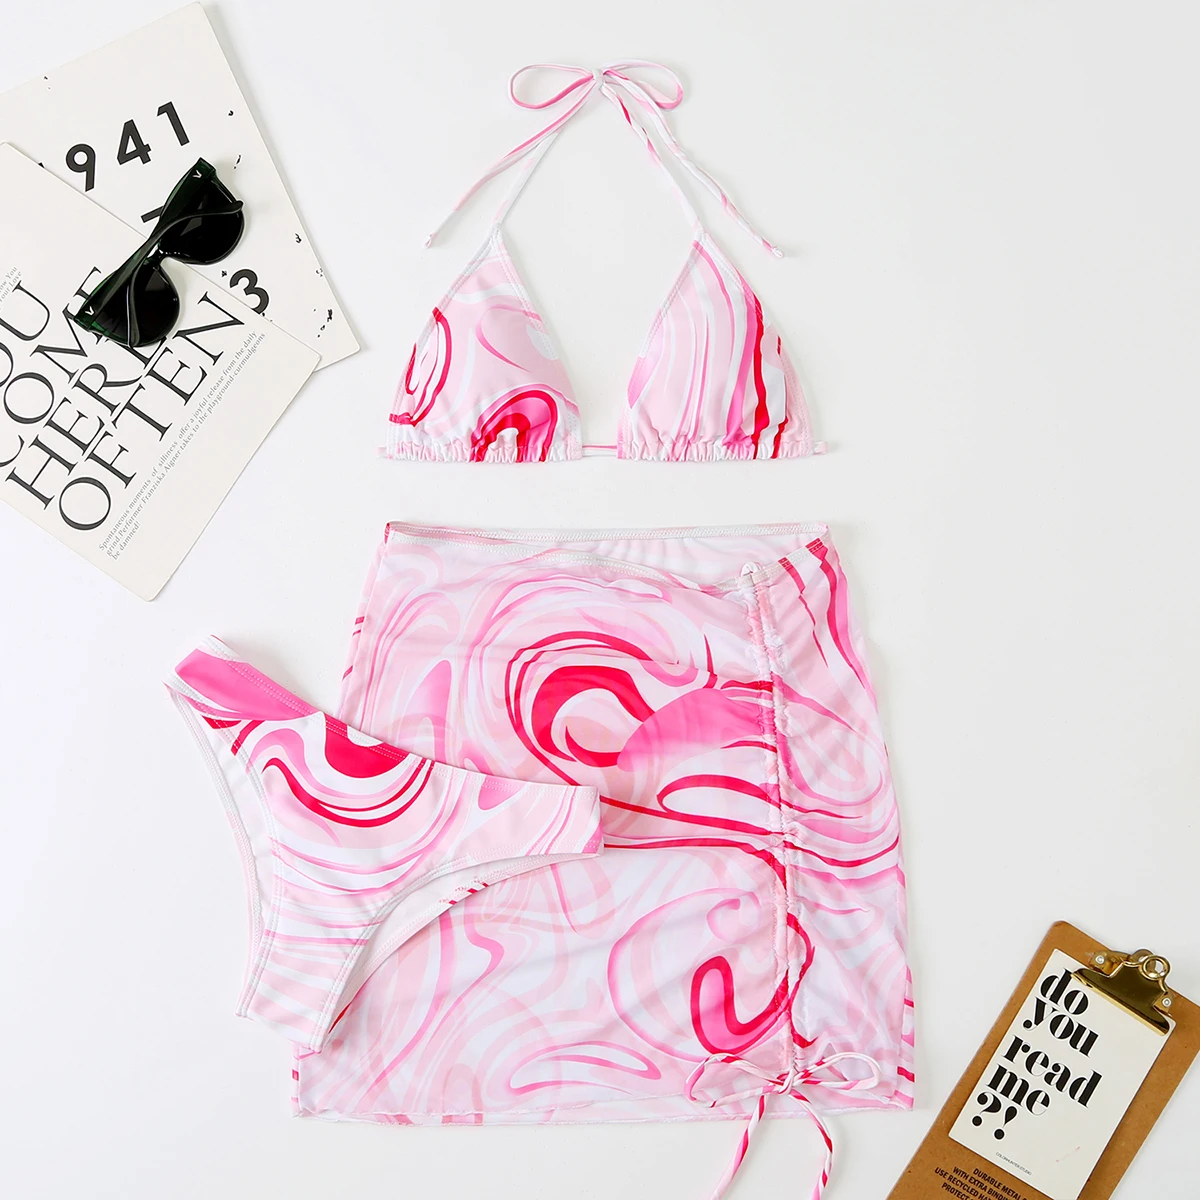 3 Pieces Bikini Set With Skirt  Tie Dye String Thong Bathing Suit Women Swimsuit Female  Swimwear Beach Wear Swim Lady Summer pink bikini set